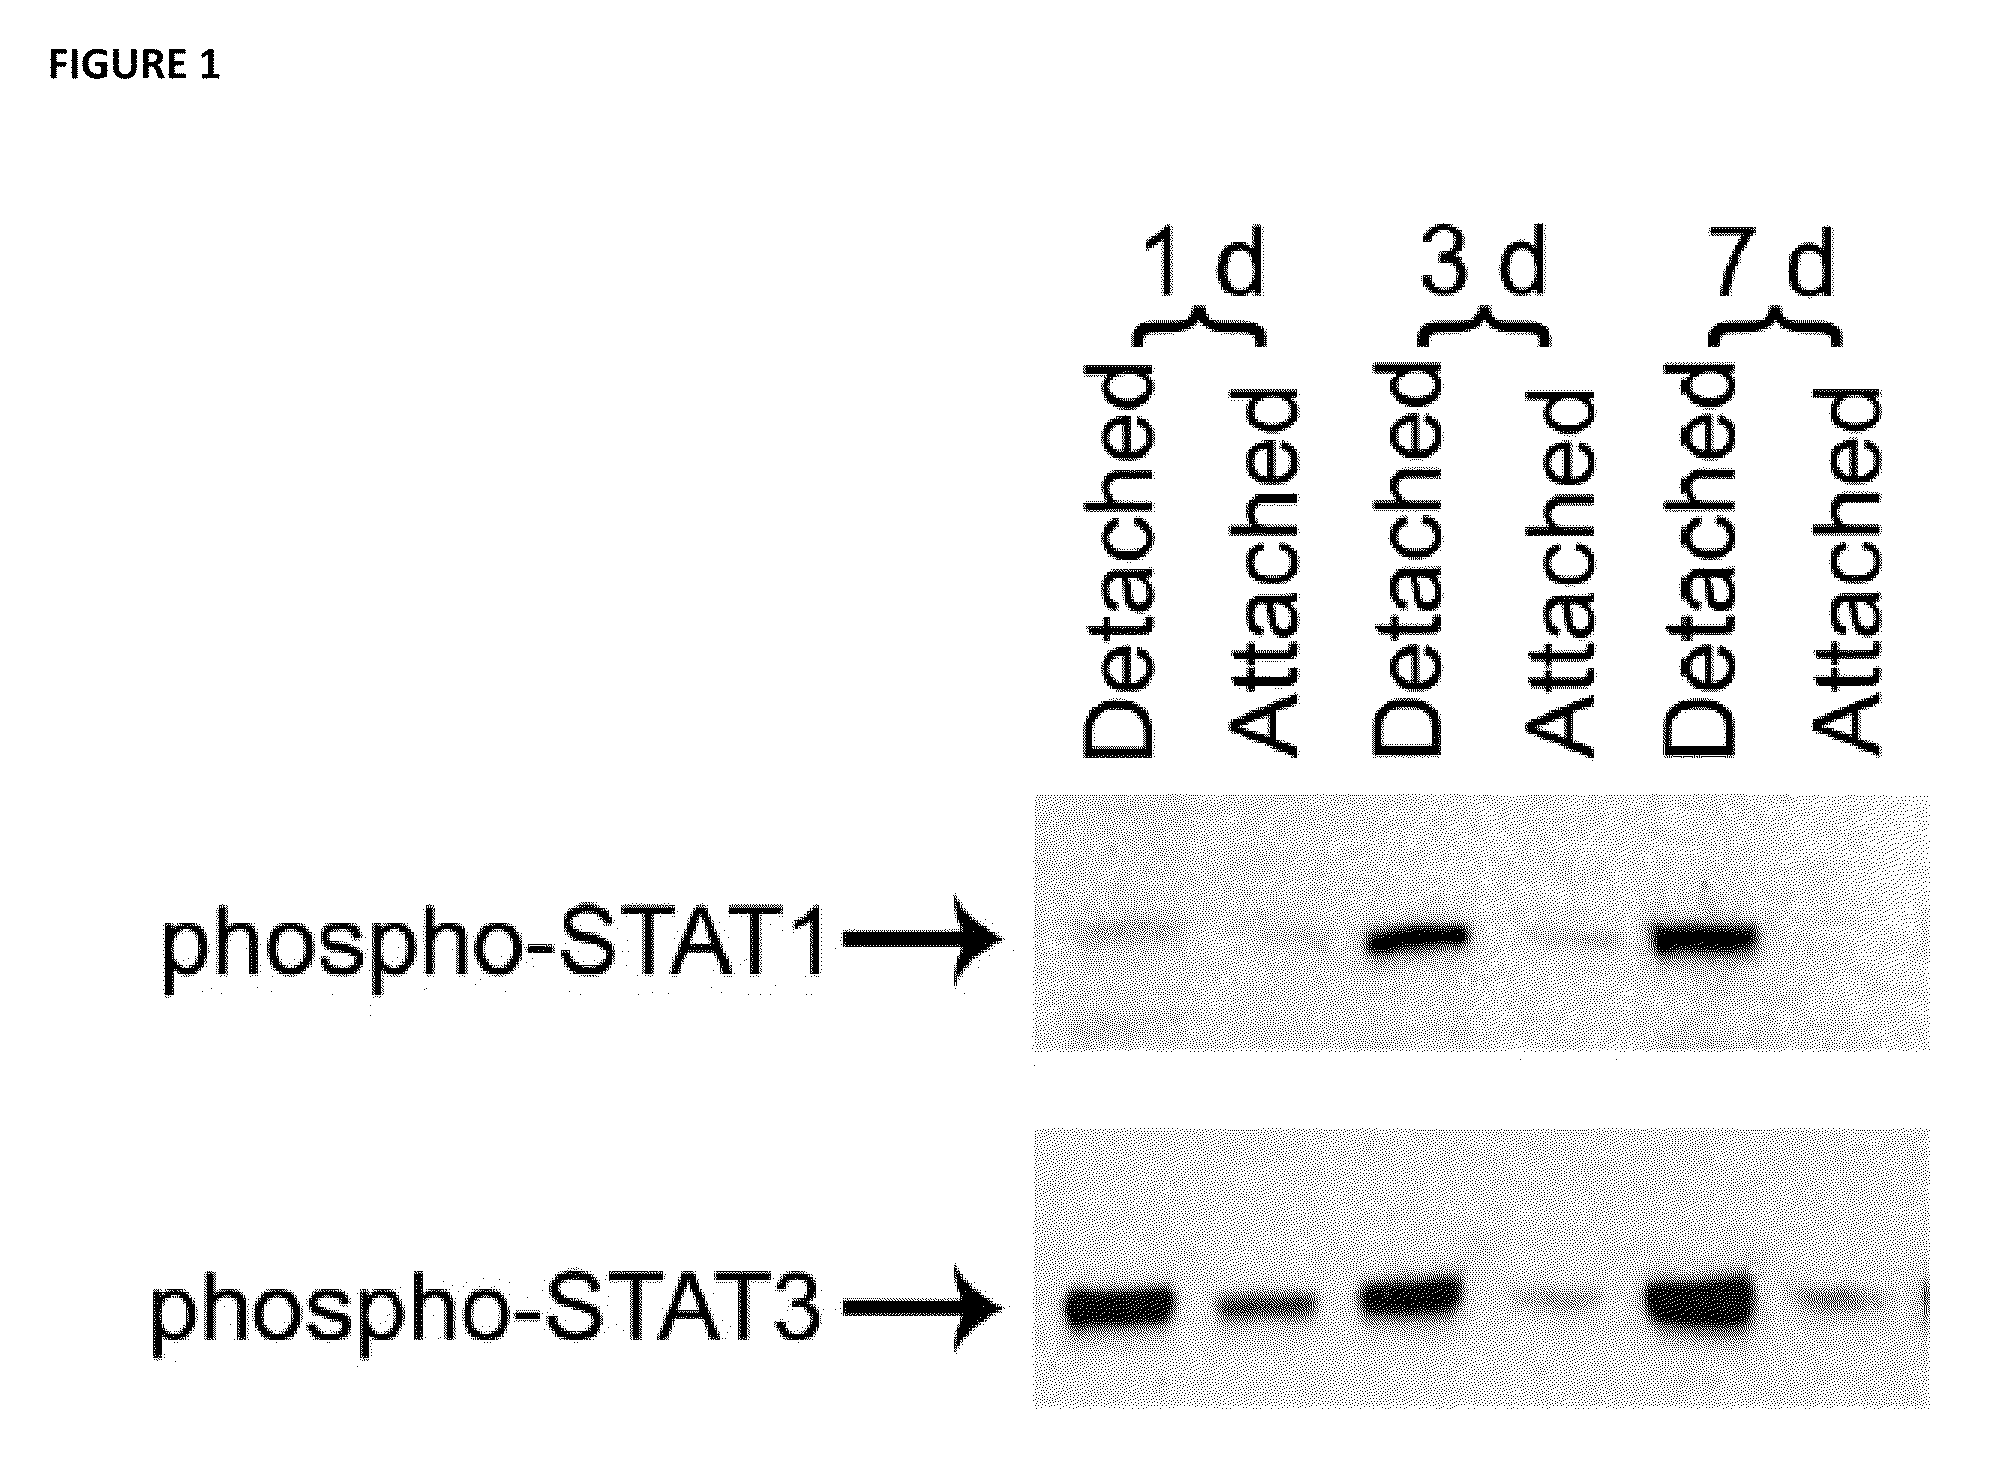 Methods of inhibiting photoreceptor apoptosis